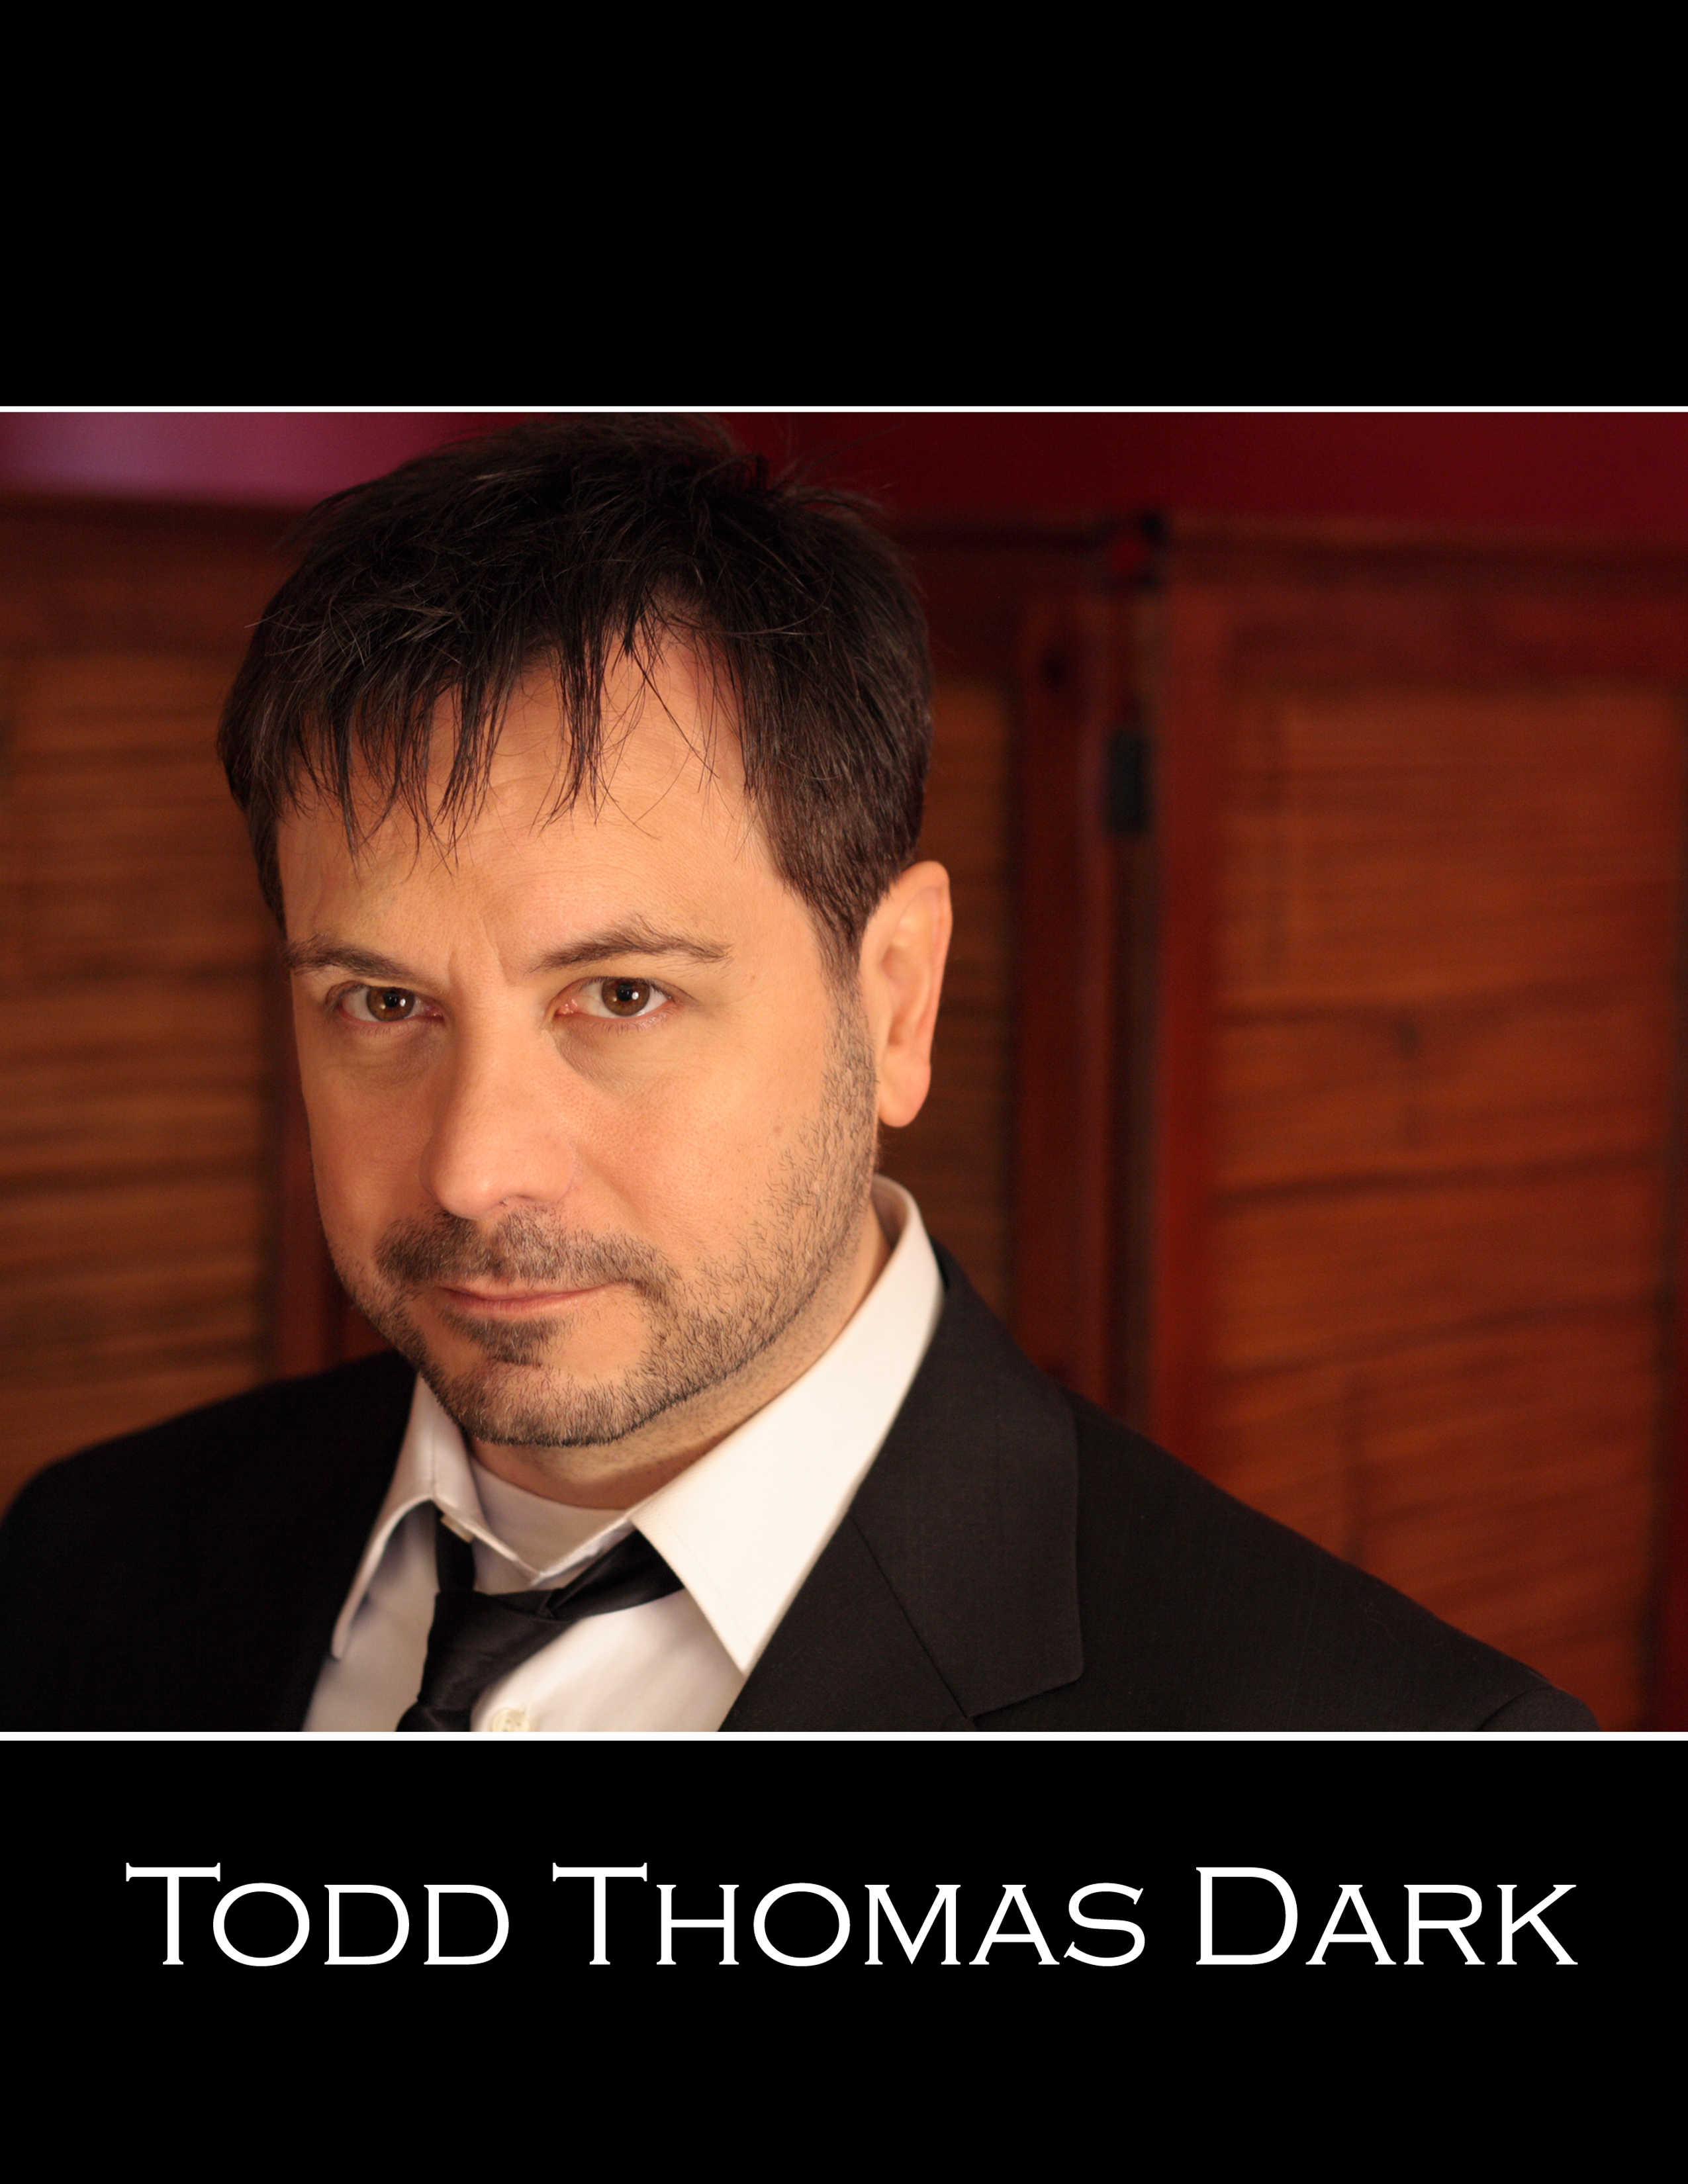 Todd Thomas Dark 2011 headshot loose tie jazz man? reporter? lawyer? detective?